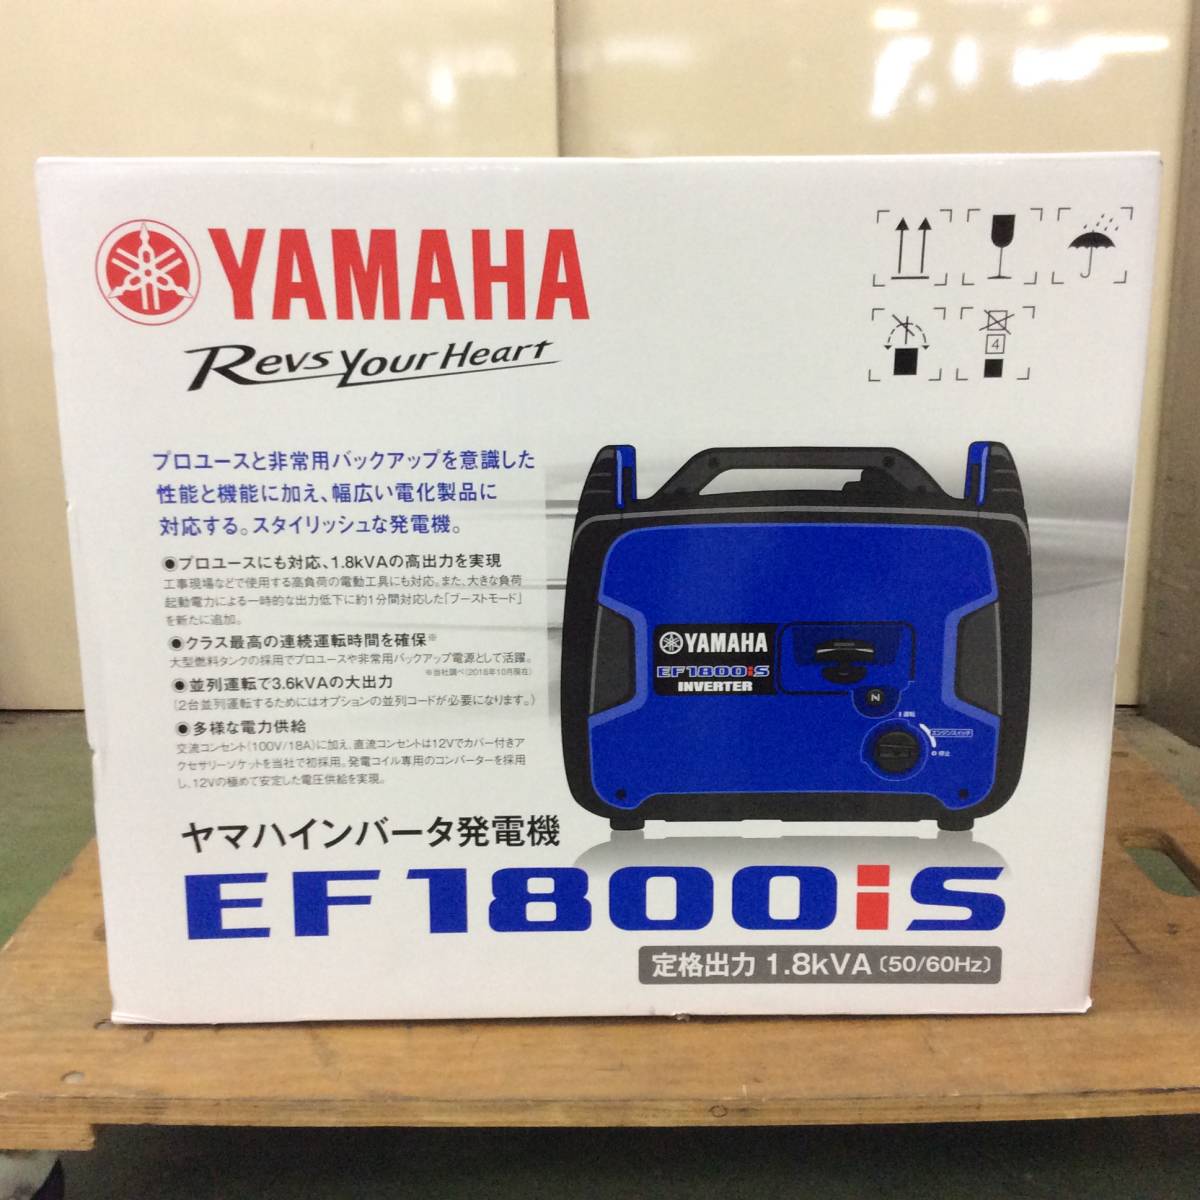 【WH-3894】新品 未開封 YAMAHA ヤマハ インバーター発電機 EF1800iS 防音型 定格出力1.8kVA パソコン 精密機器使用可能 非常電源 防災_画像1